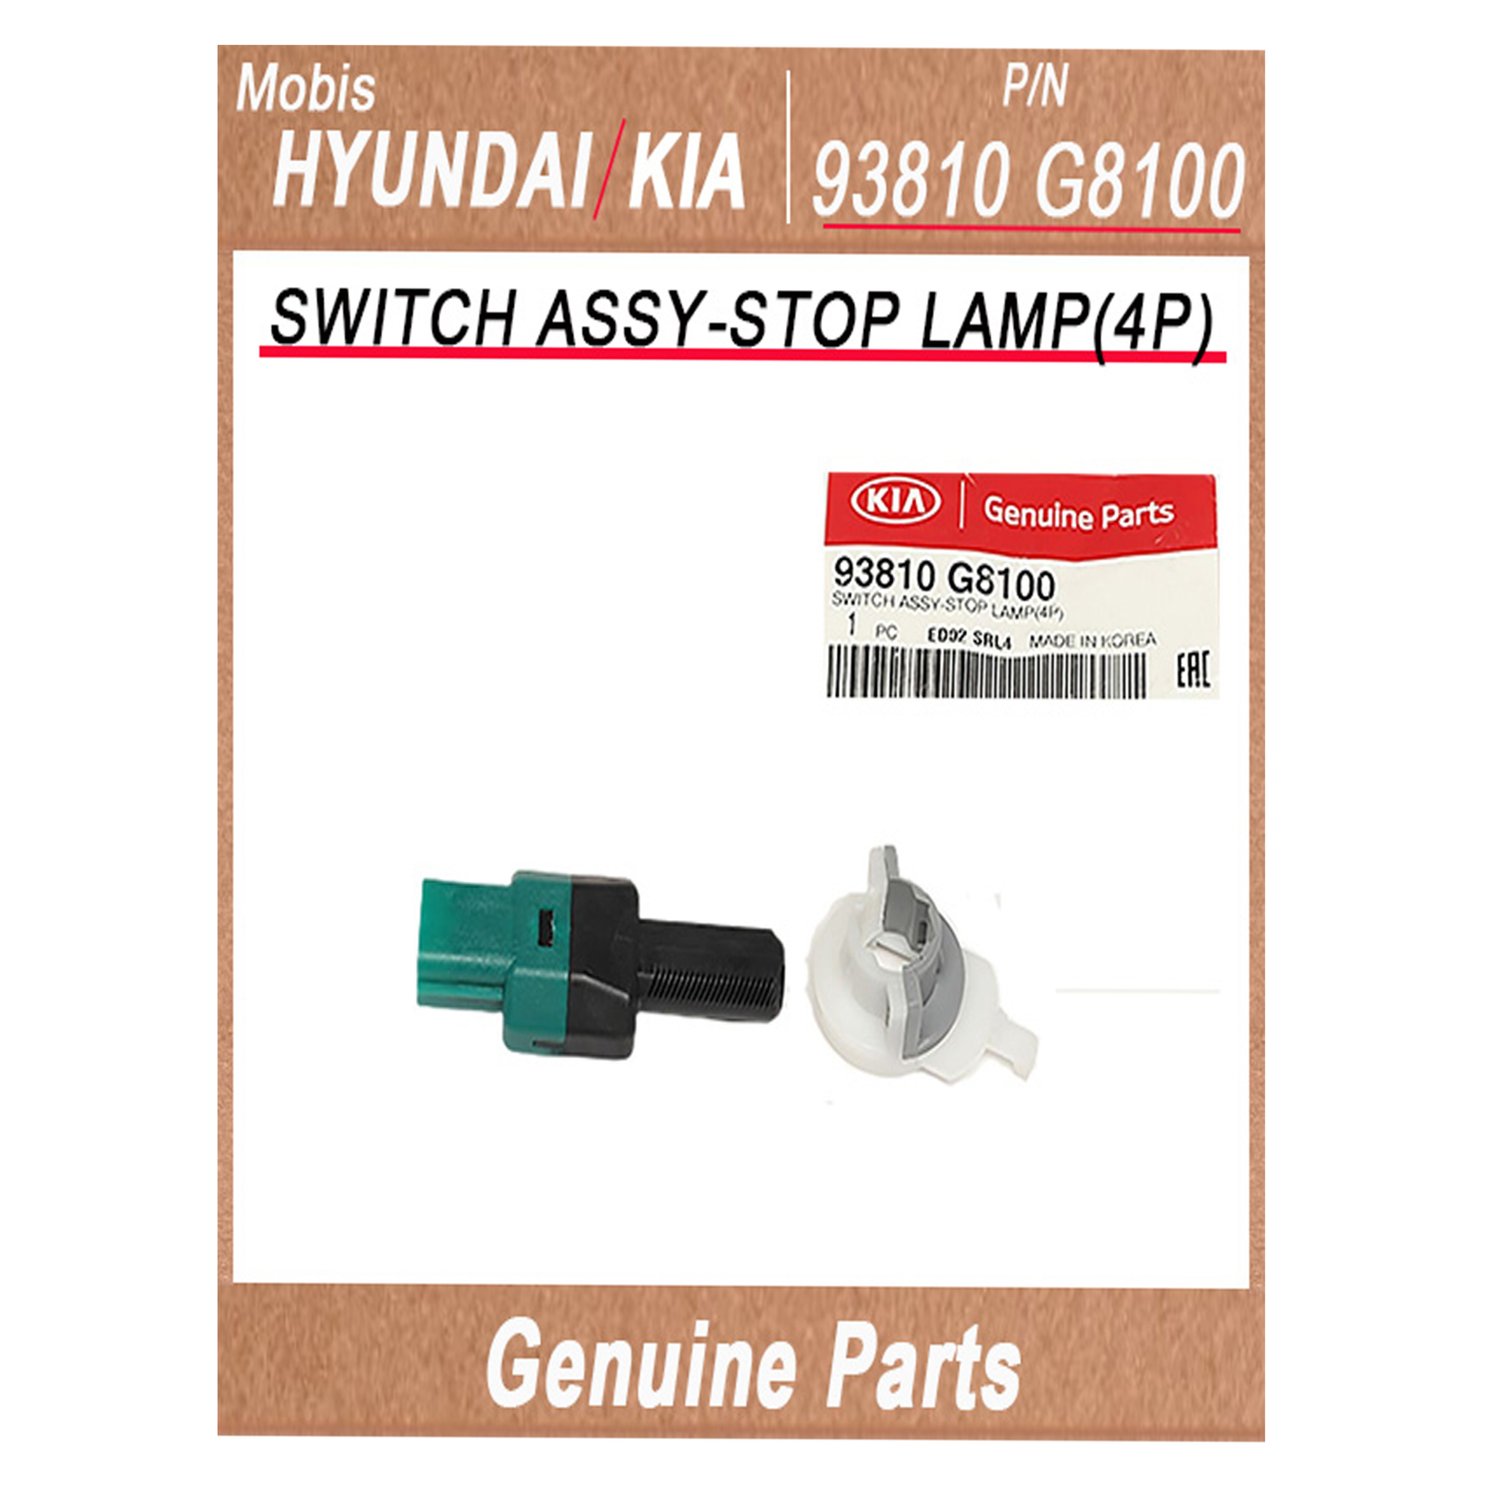 93810G8100 _ SWITCH ASSY_STOP LAMP_4P_ _ Genuine Korean Automotive Spare Parts _ Hyundai Kia _Mobis_